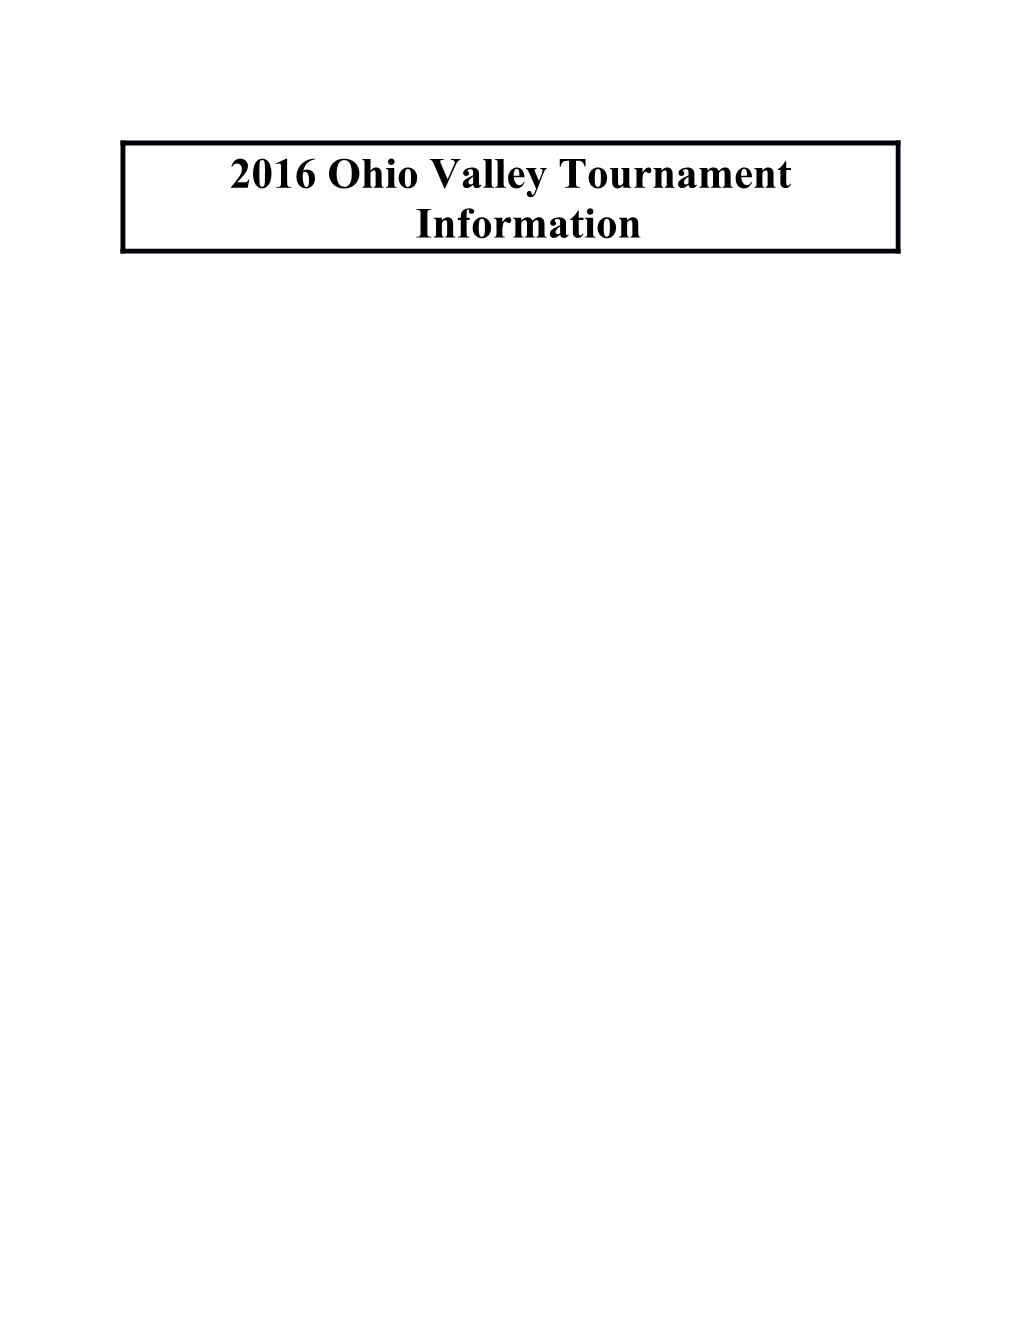 2016 Ohio Valley Tournament Information